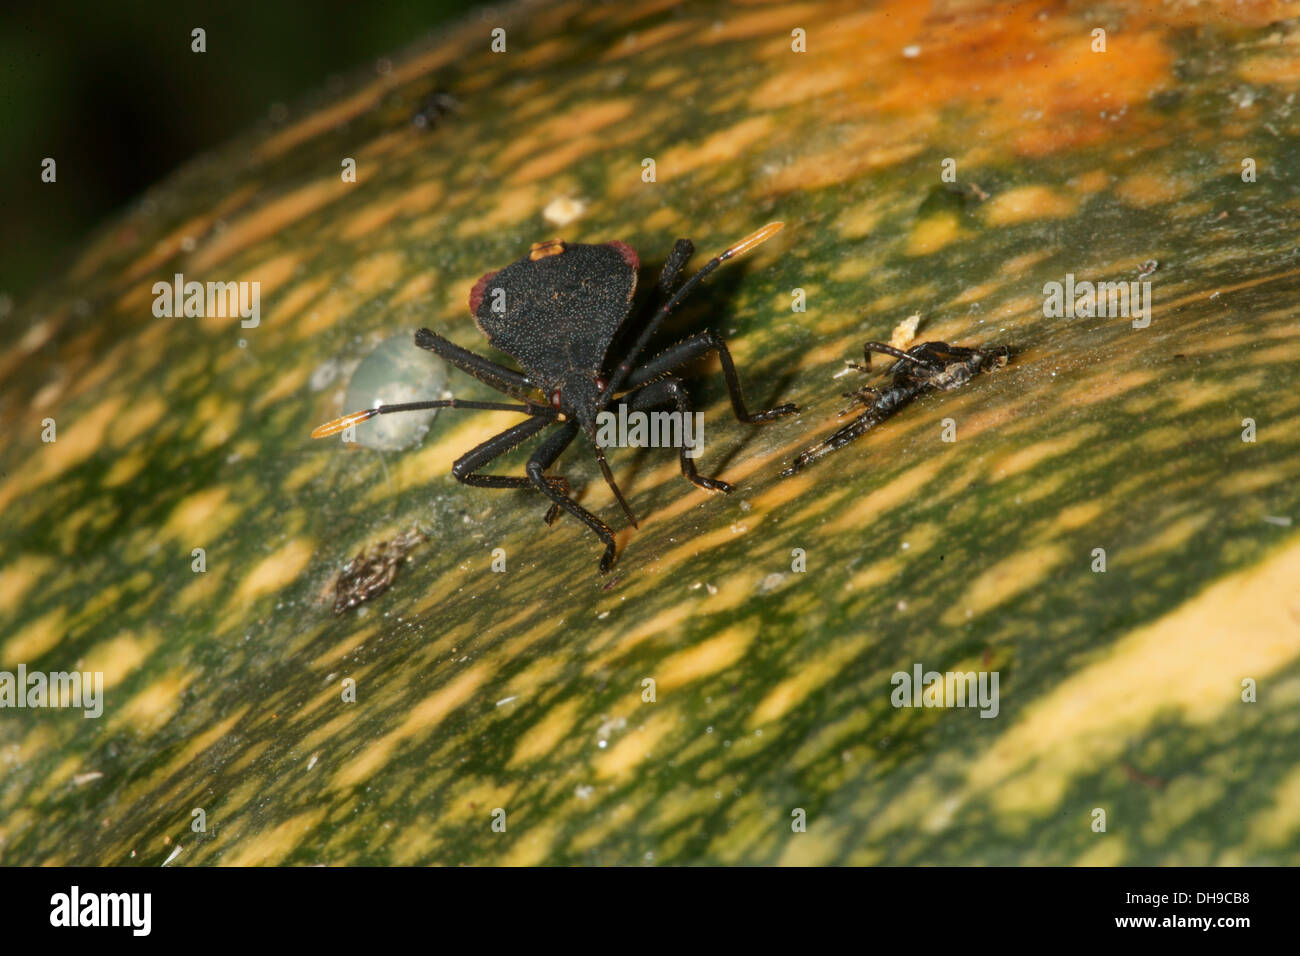 Shield bug beetle on pumpkin Stock Photo